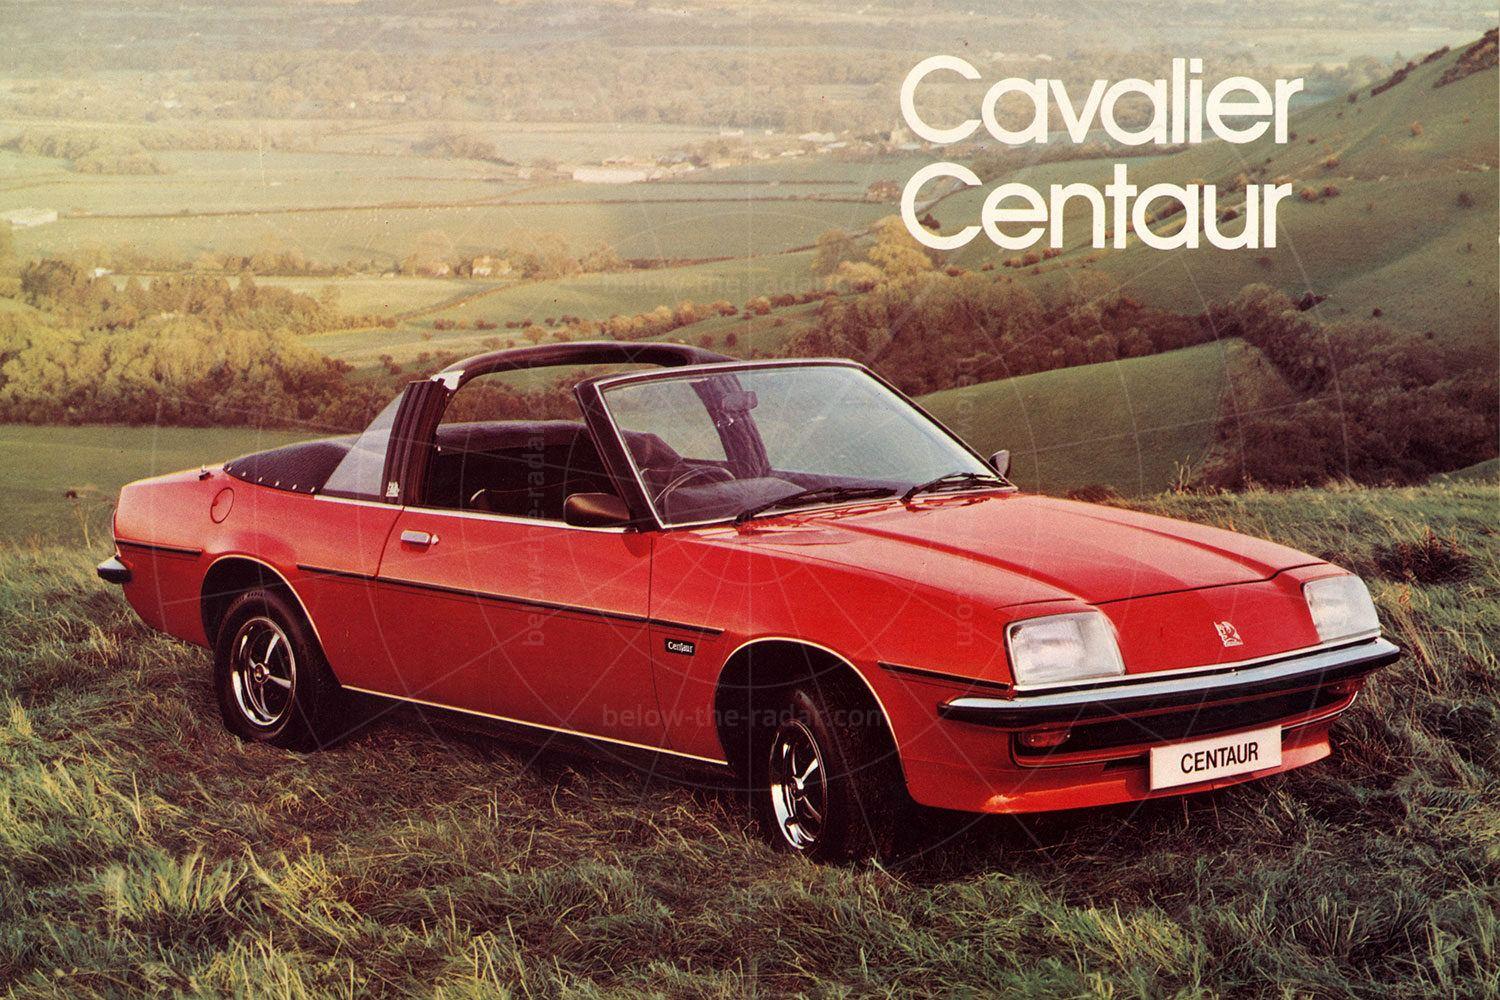 Vauxhall Cavalier Centaur sales brochure Pic: magiccarpics.co.uk | Vauxhall Cavalier Centaur sales brochure